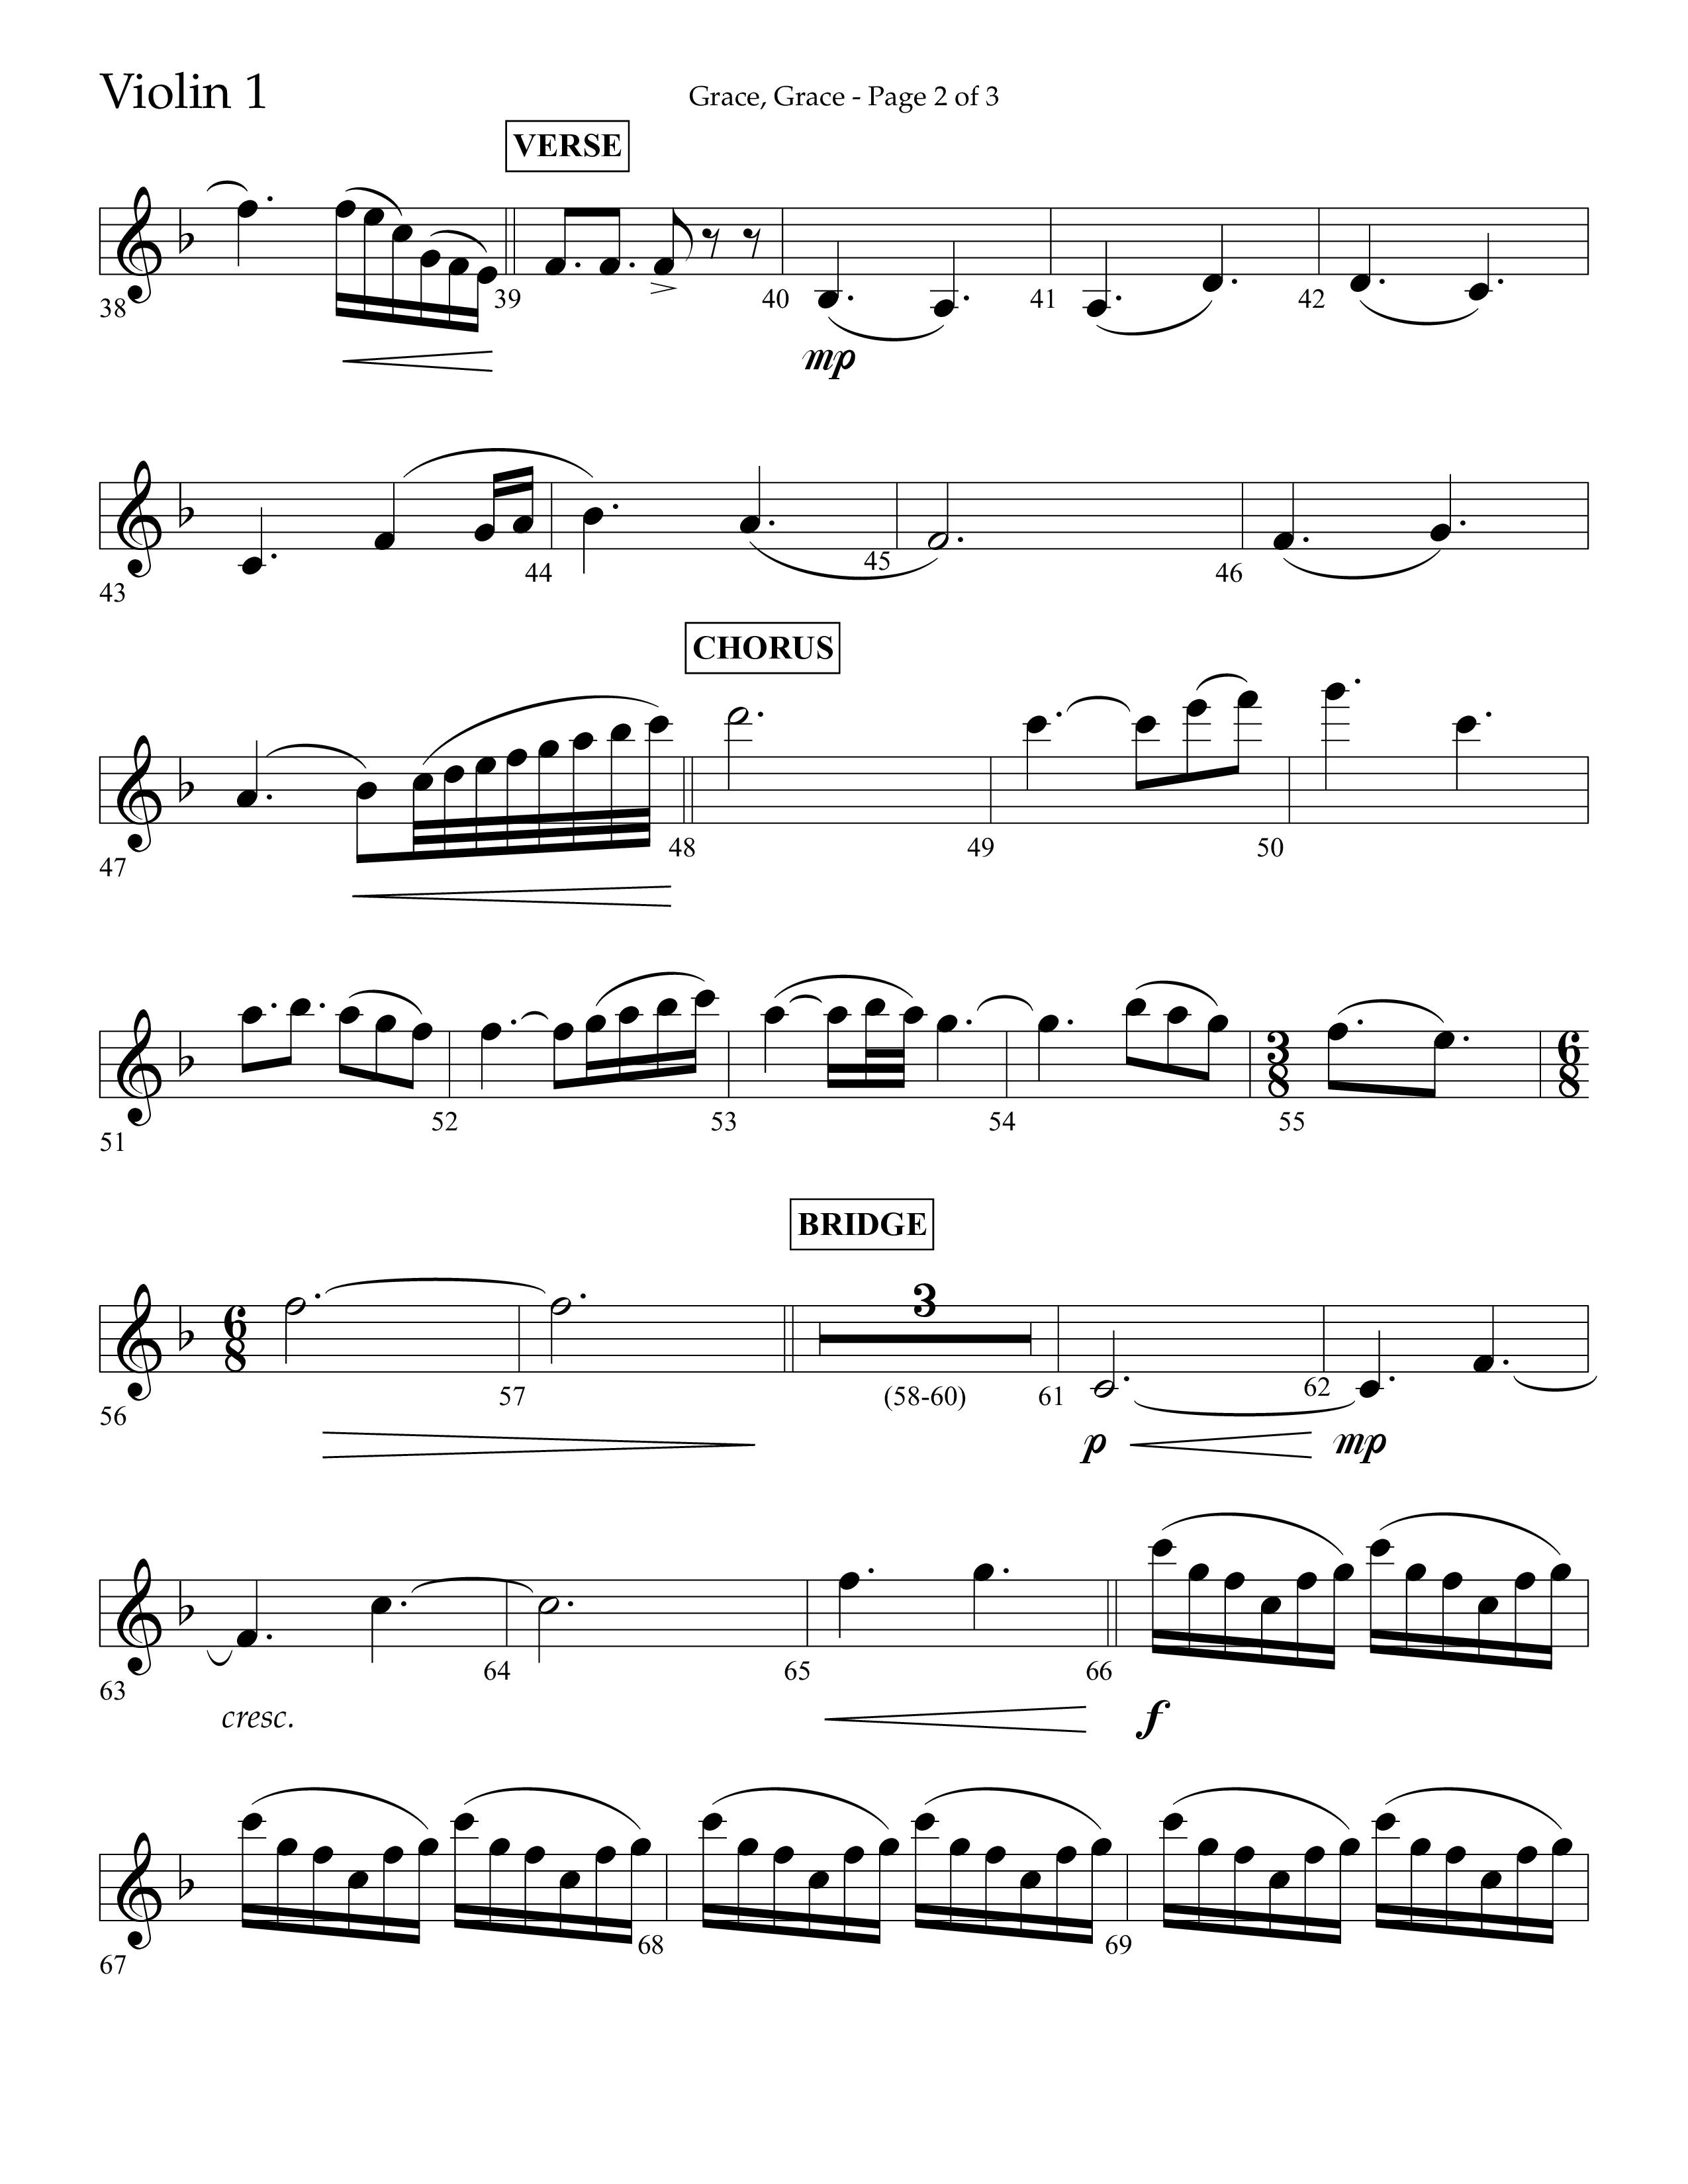 Grace Grace (Choral Anthem SATB) Violin 1 (Lifeway Choral / Arr. John Bolin / Arr. Don Koch / Arr. Eric Belvin / Orch. Daniel Semsen)